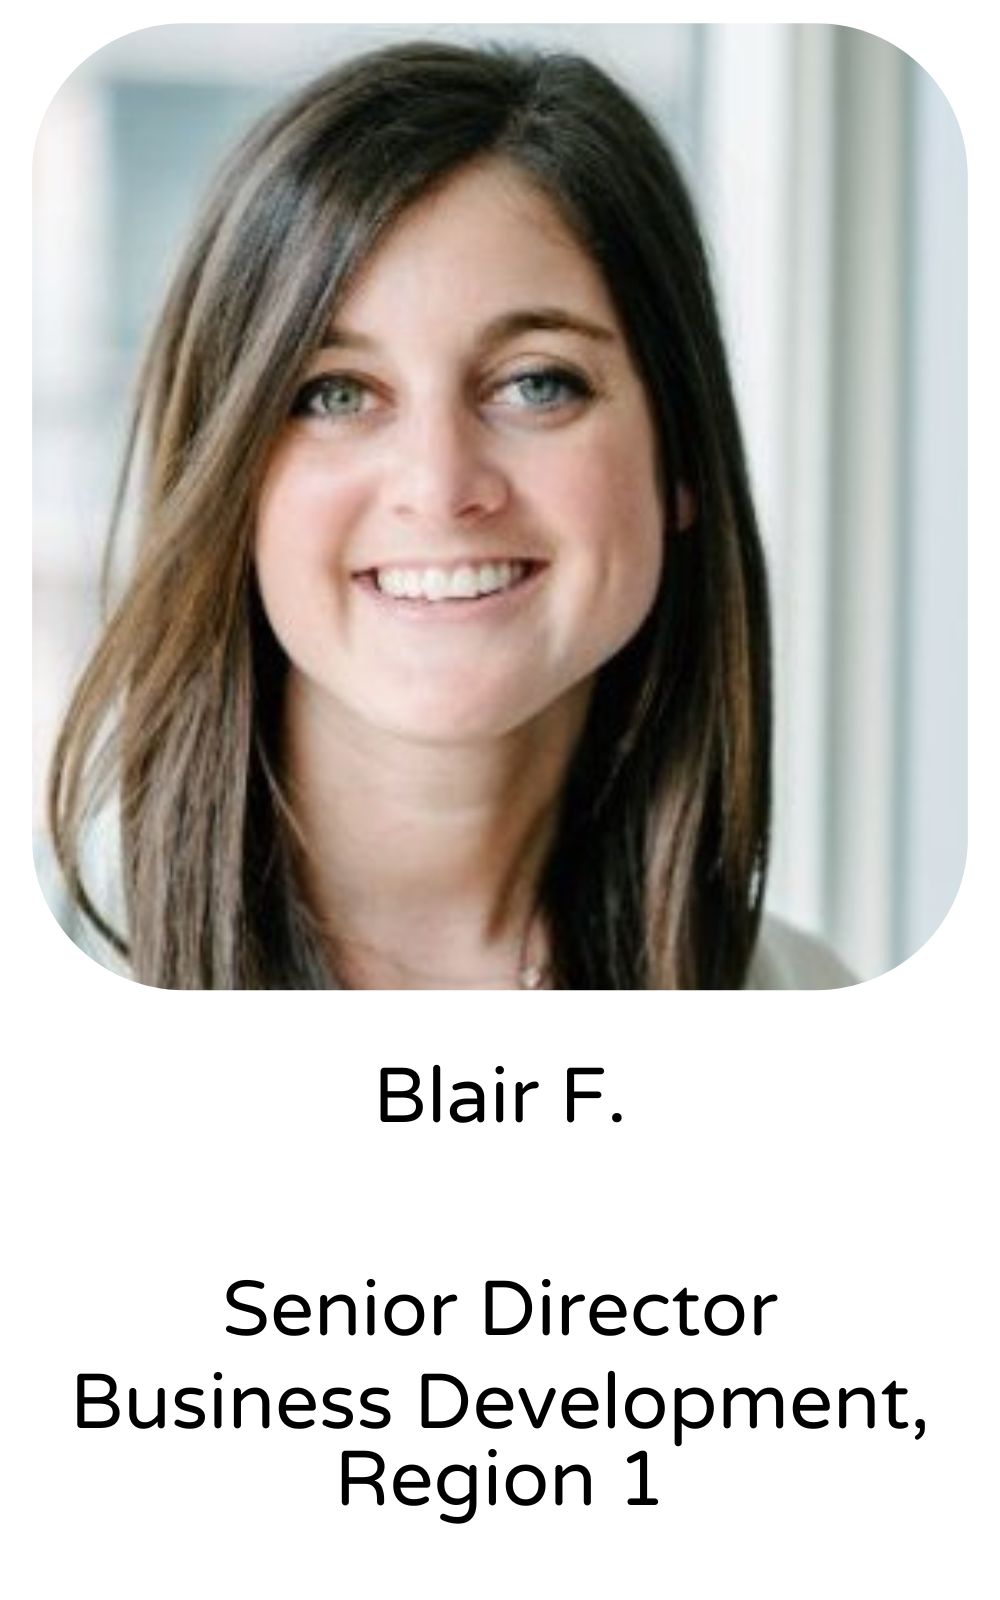 Blair F., Senior Director, Business Development, Region 1